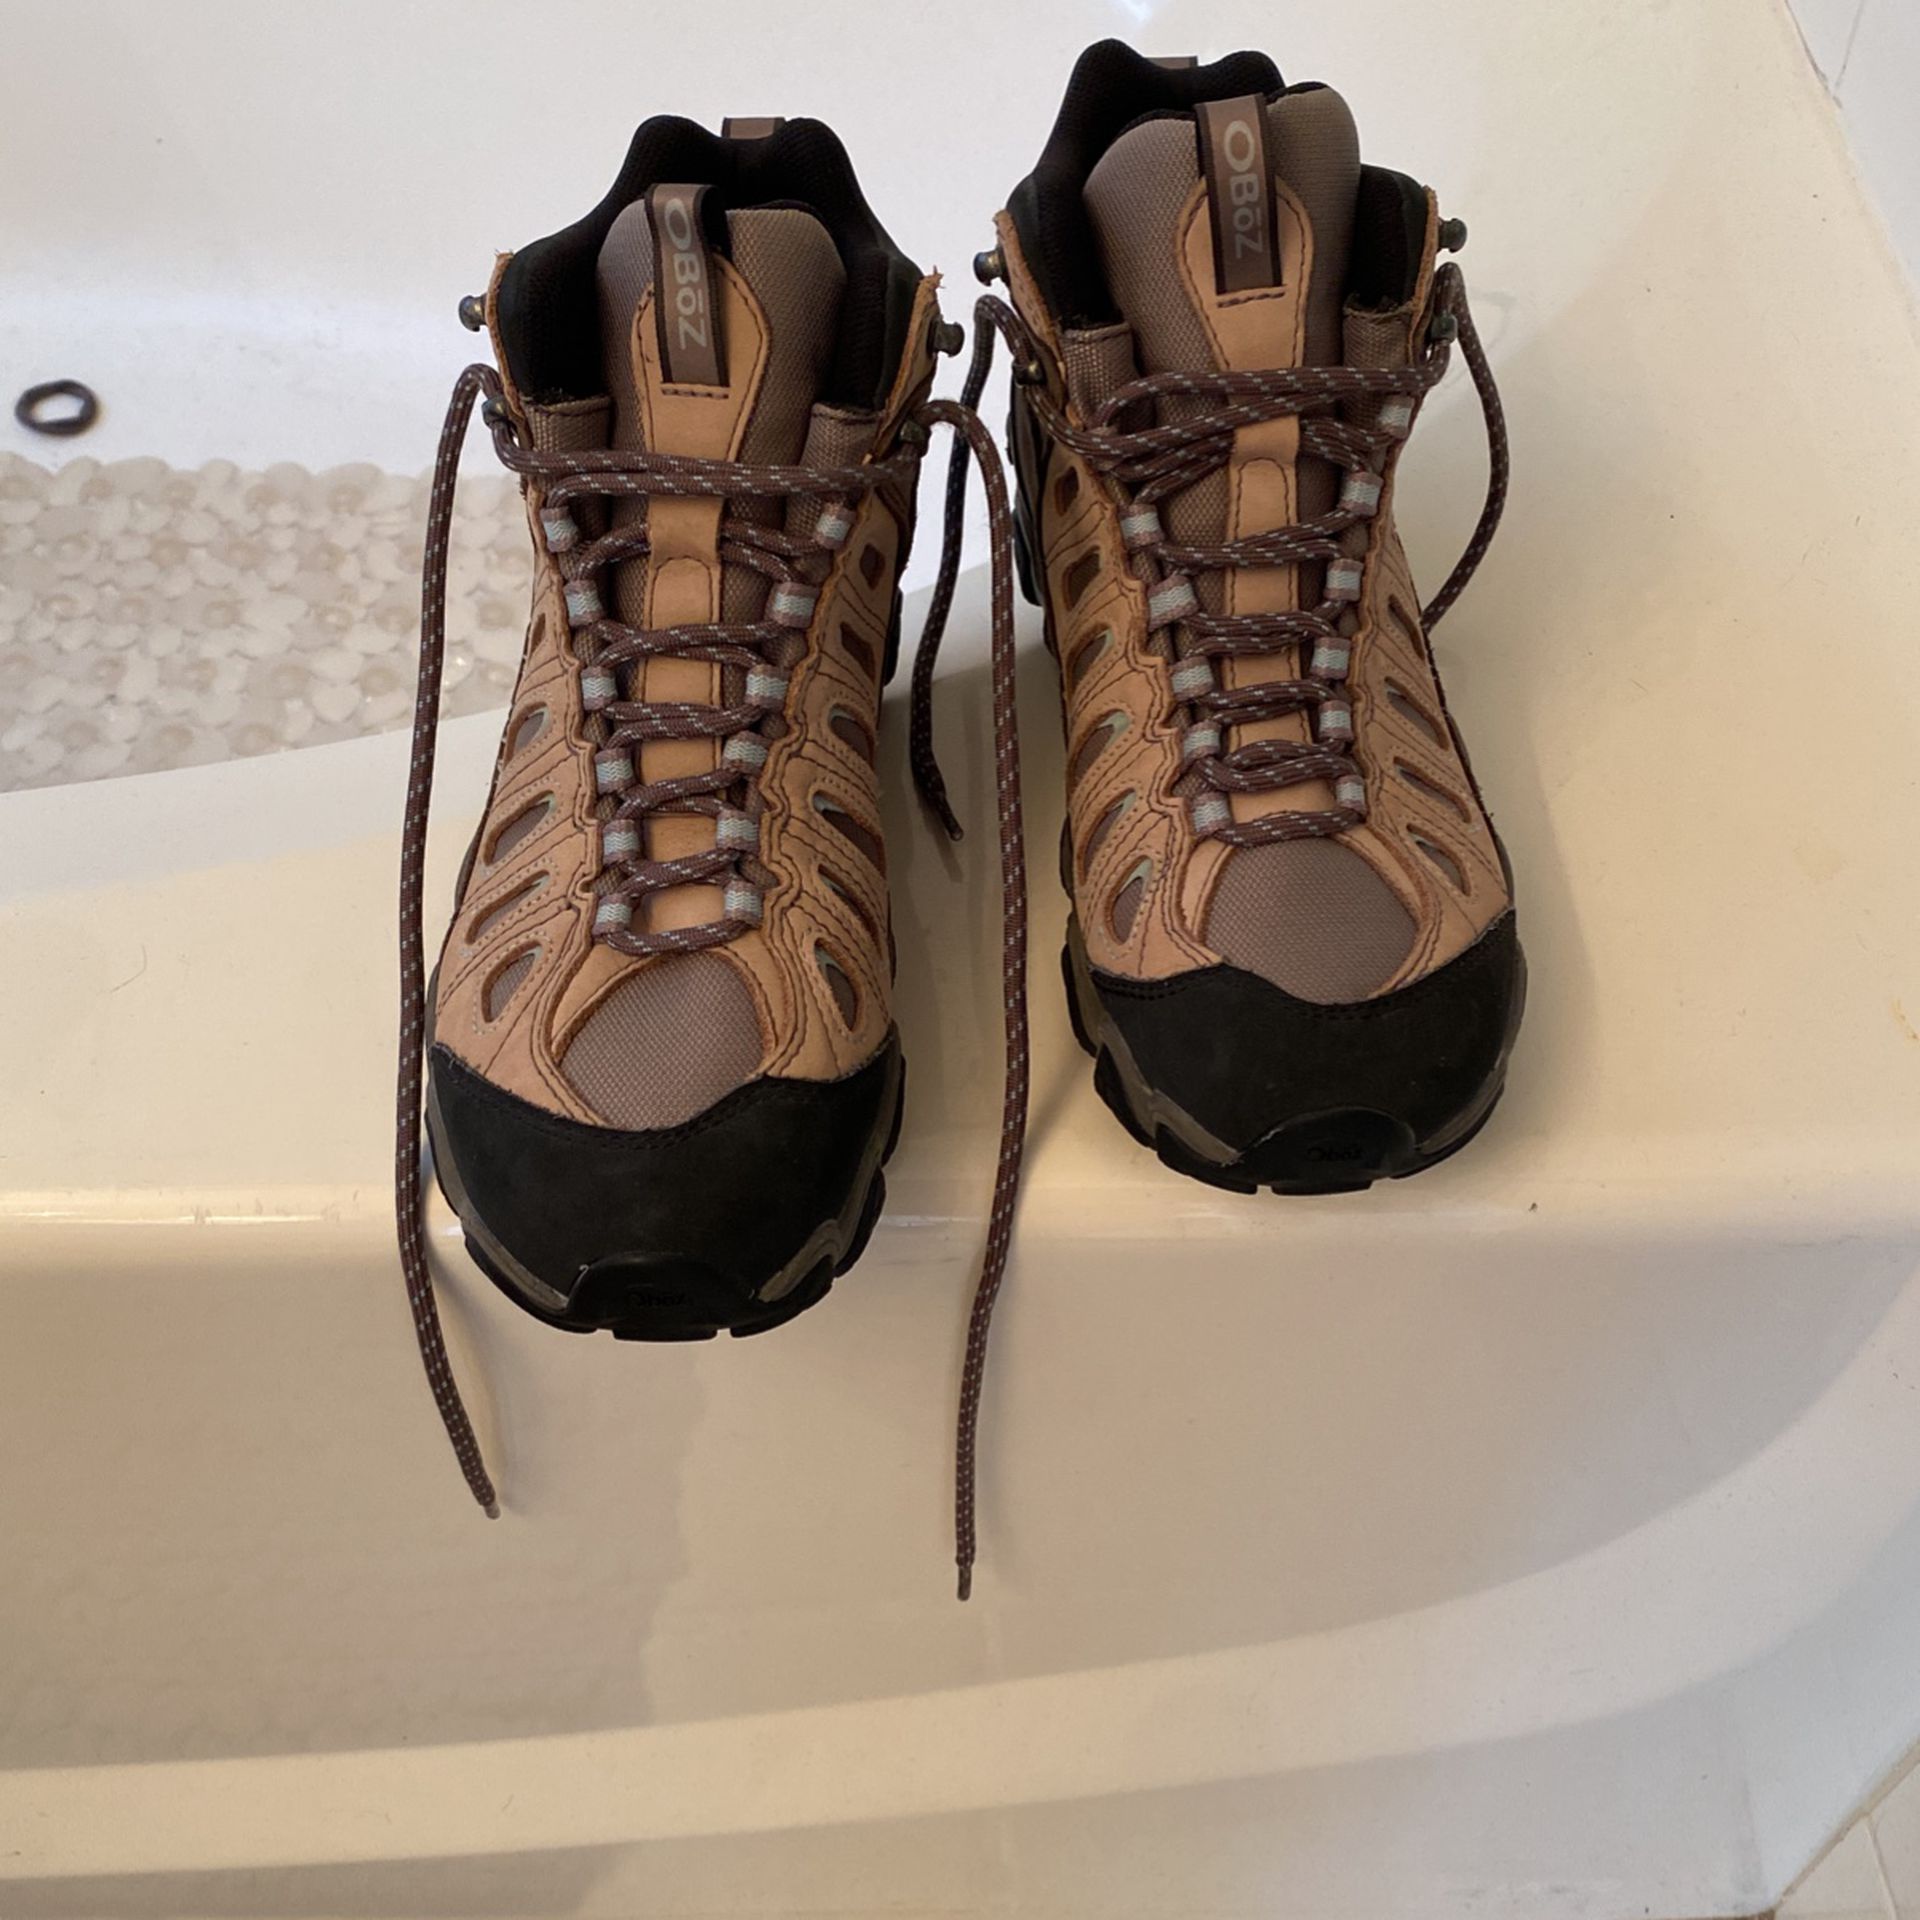 Size 8 1/2 Hiking Boots, Women